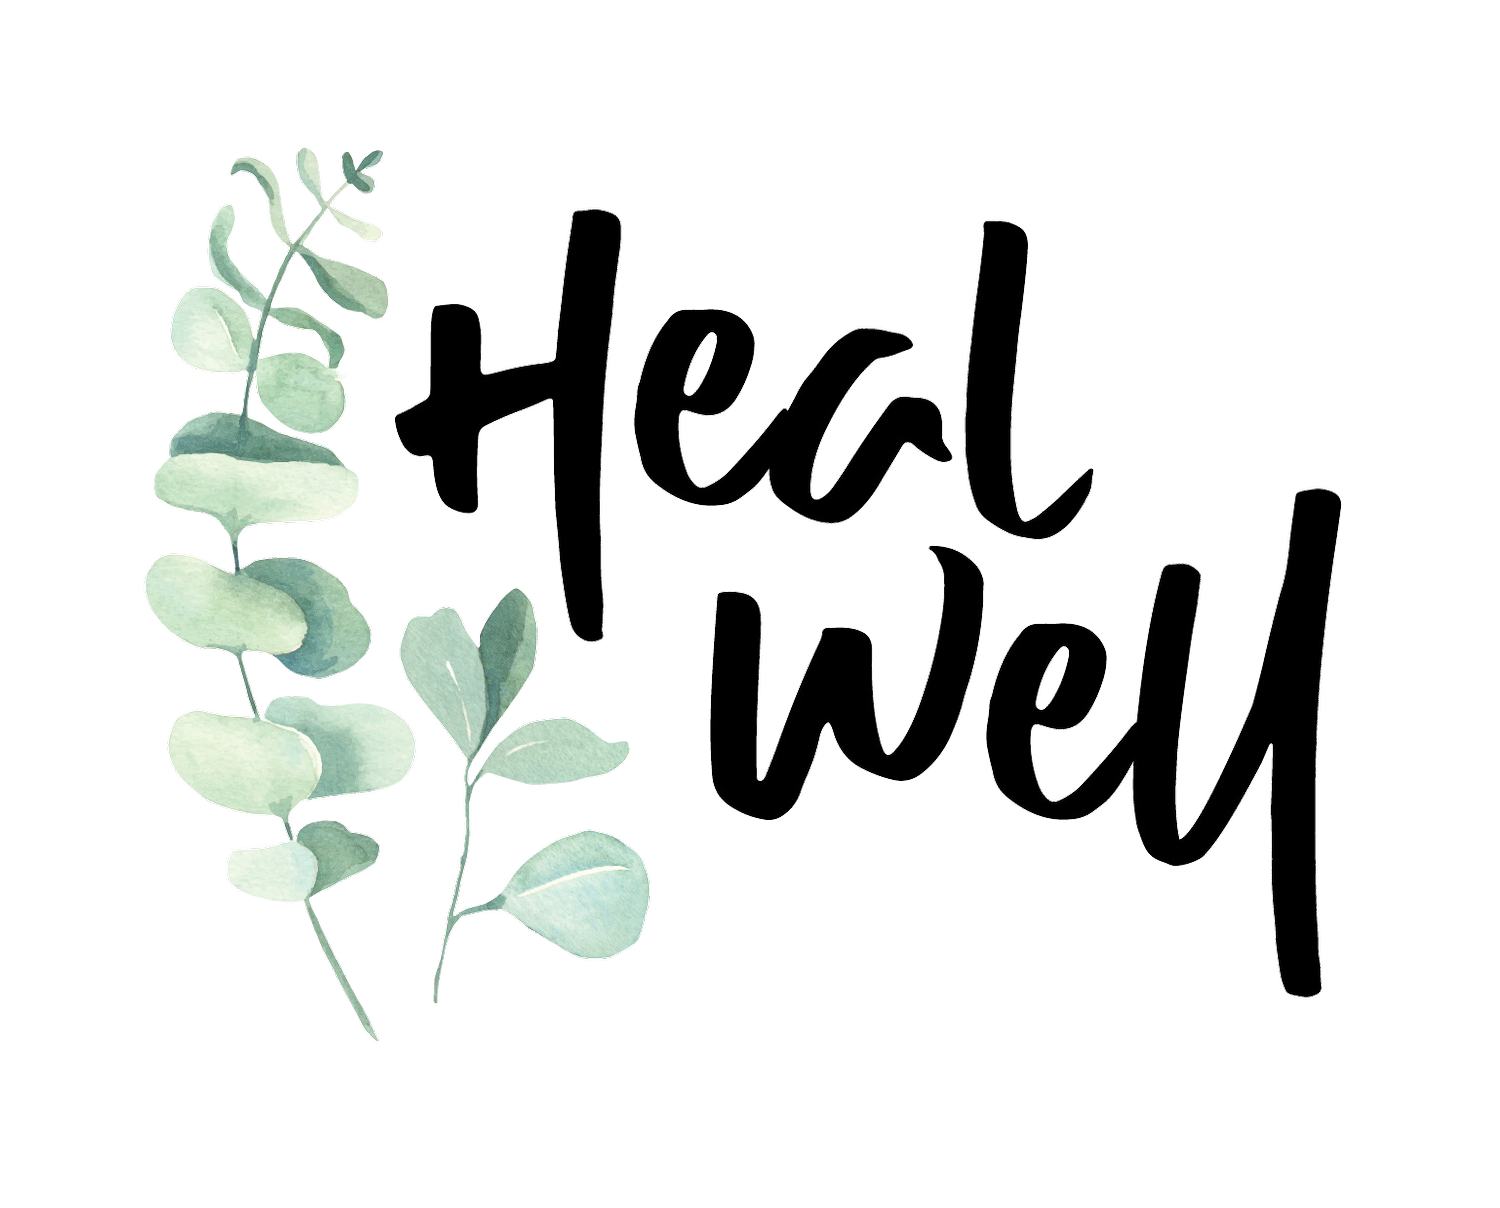 Heal Well